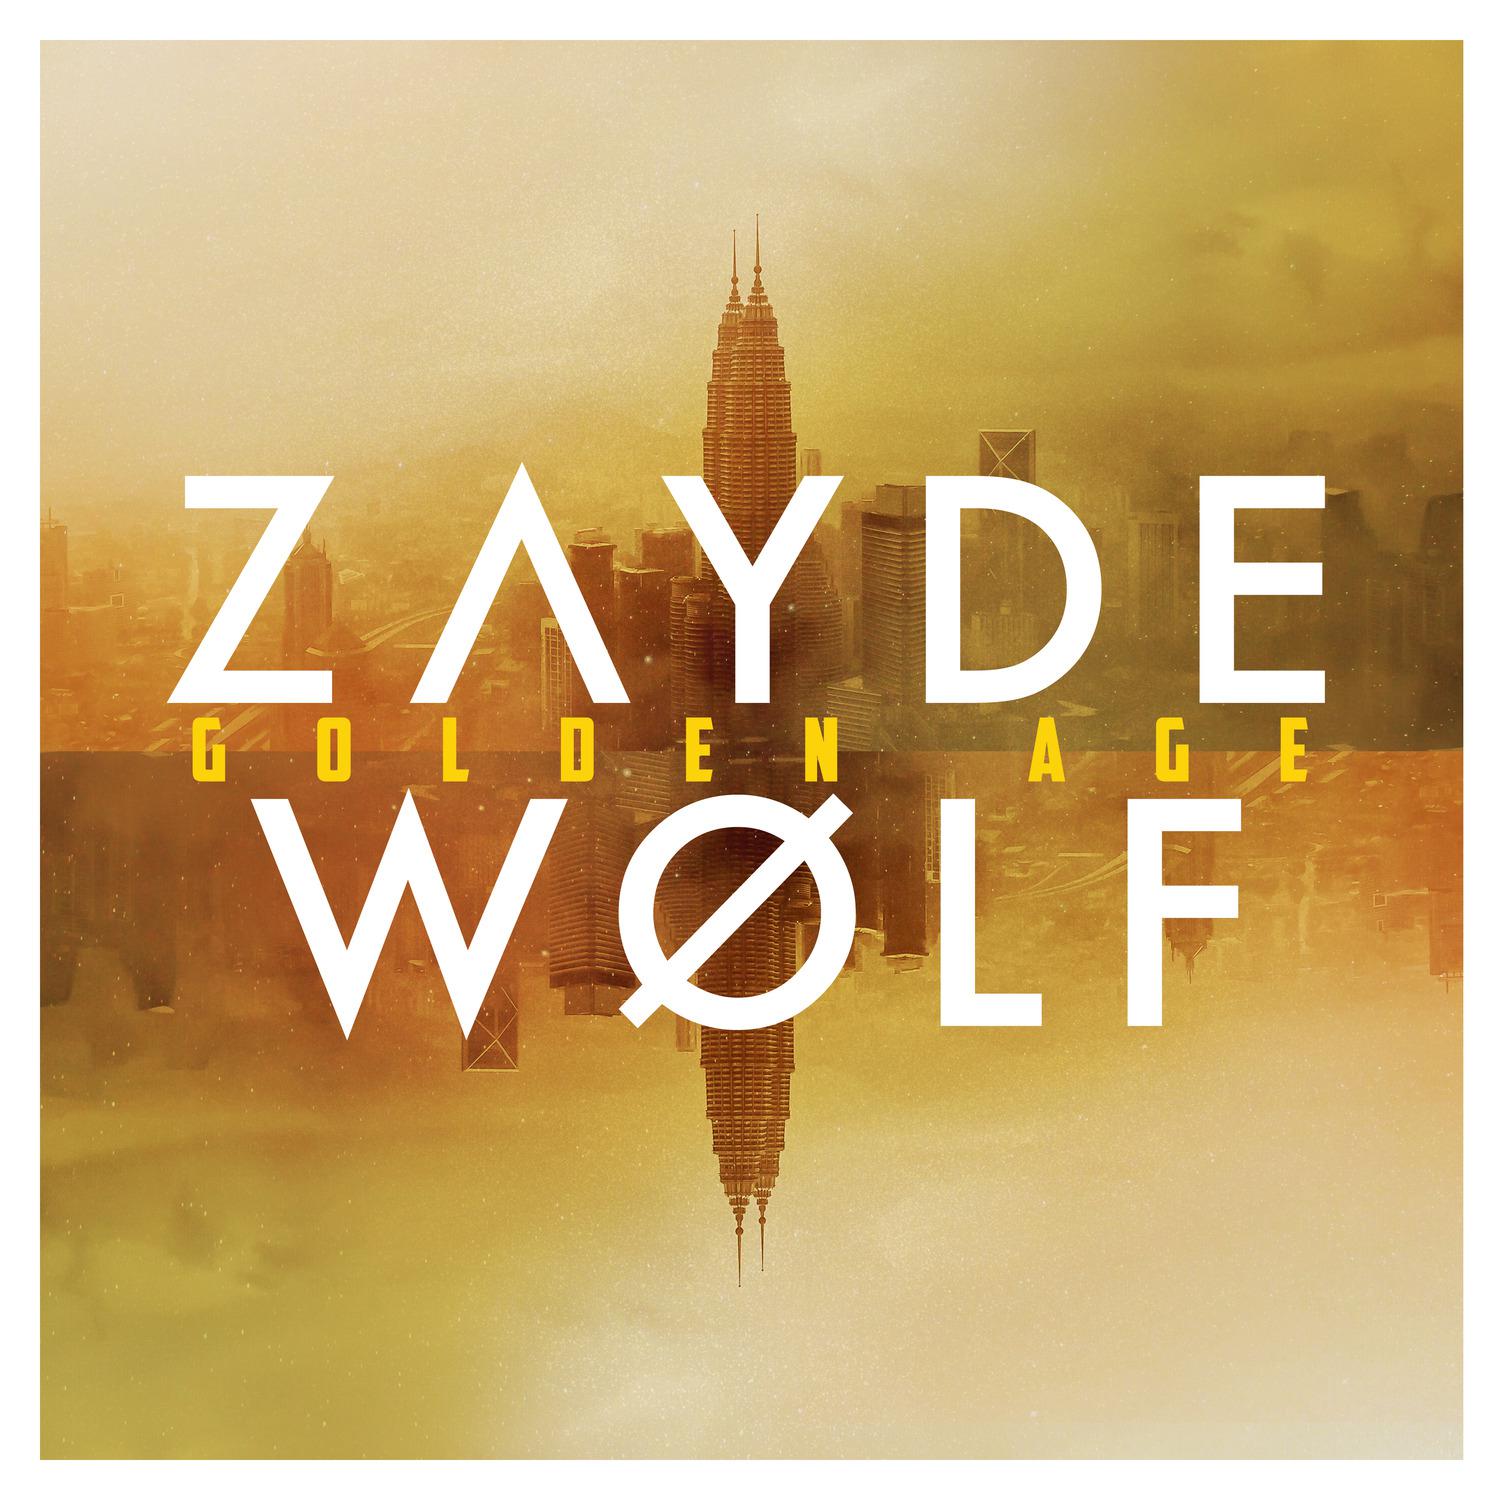 Army歌词 歌手Zayde Wølf-专辑Golden Age-单曲《Army》LRC歌词下载